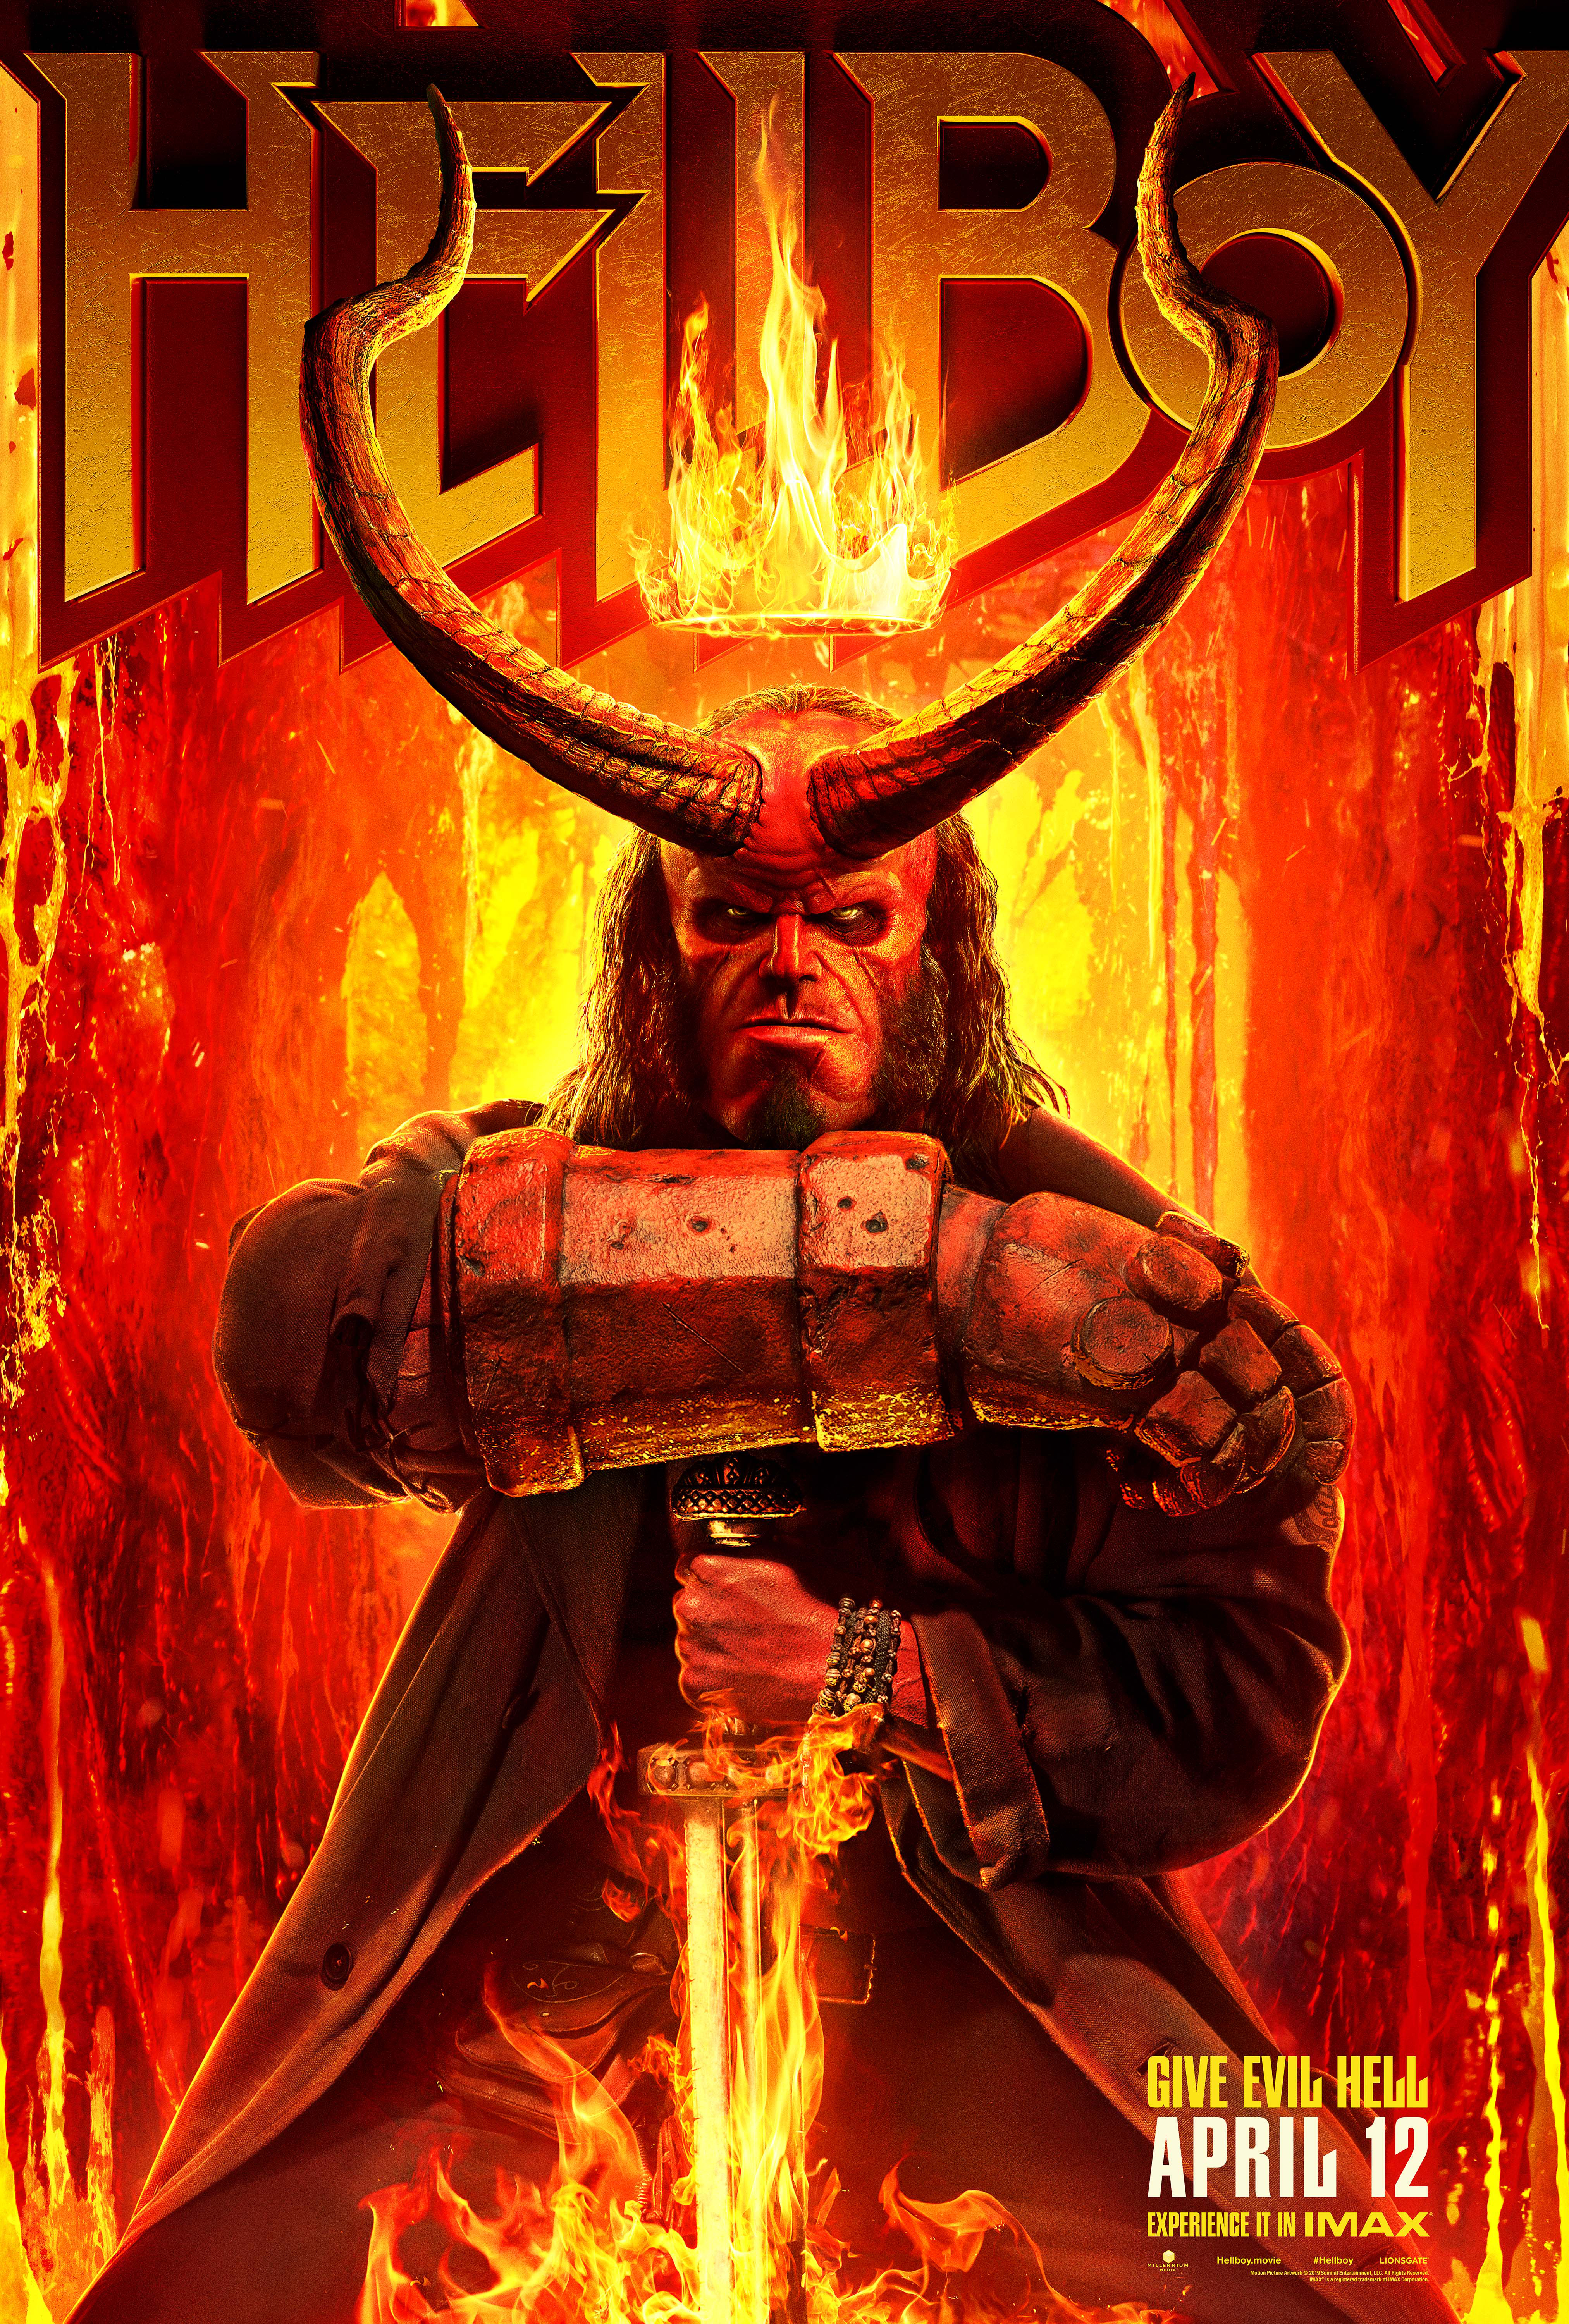 ART OF THE CUT WITH Martin Bernfeld, editor of "Hellboy" 30